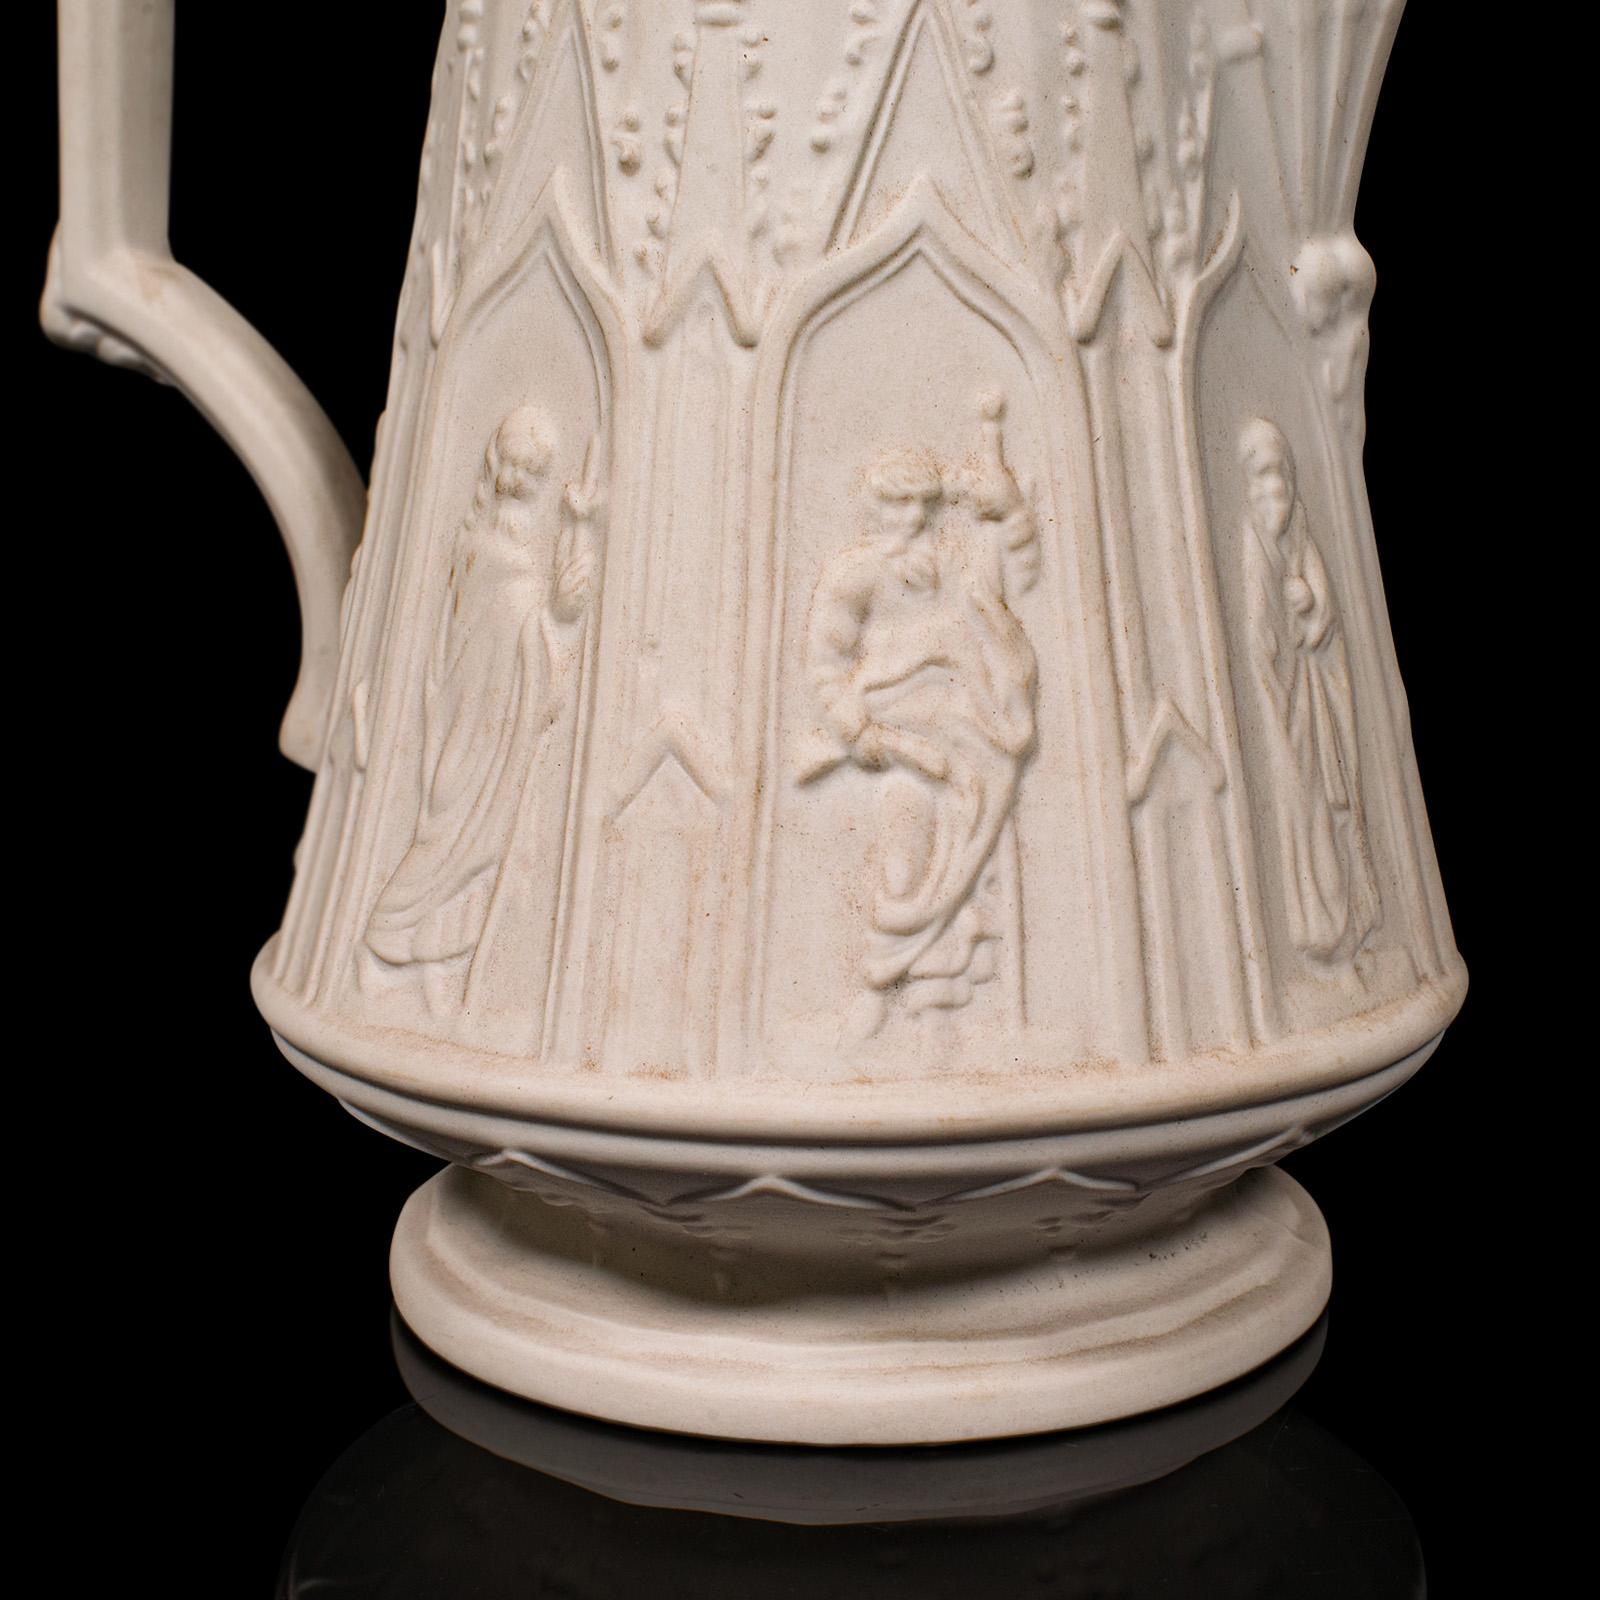 Vintage Pouring Jug, English, Parian Ware Ceramic, Serving Creamer, Decorative For Sale 4